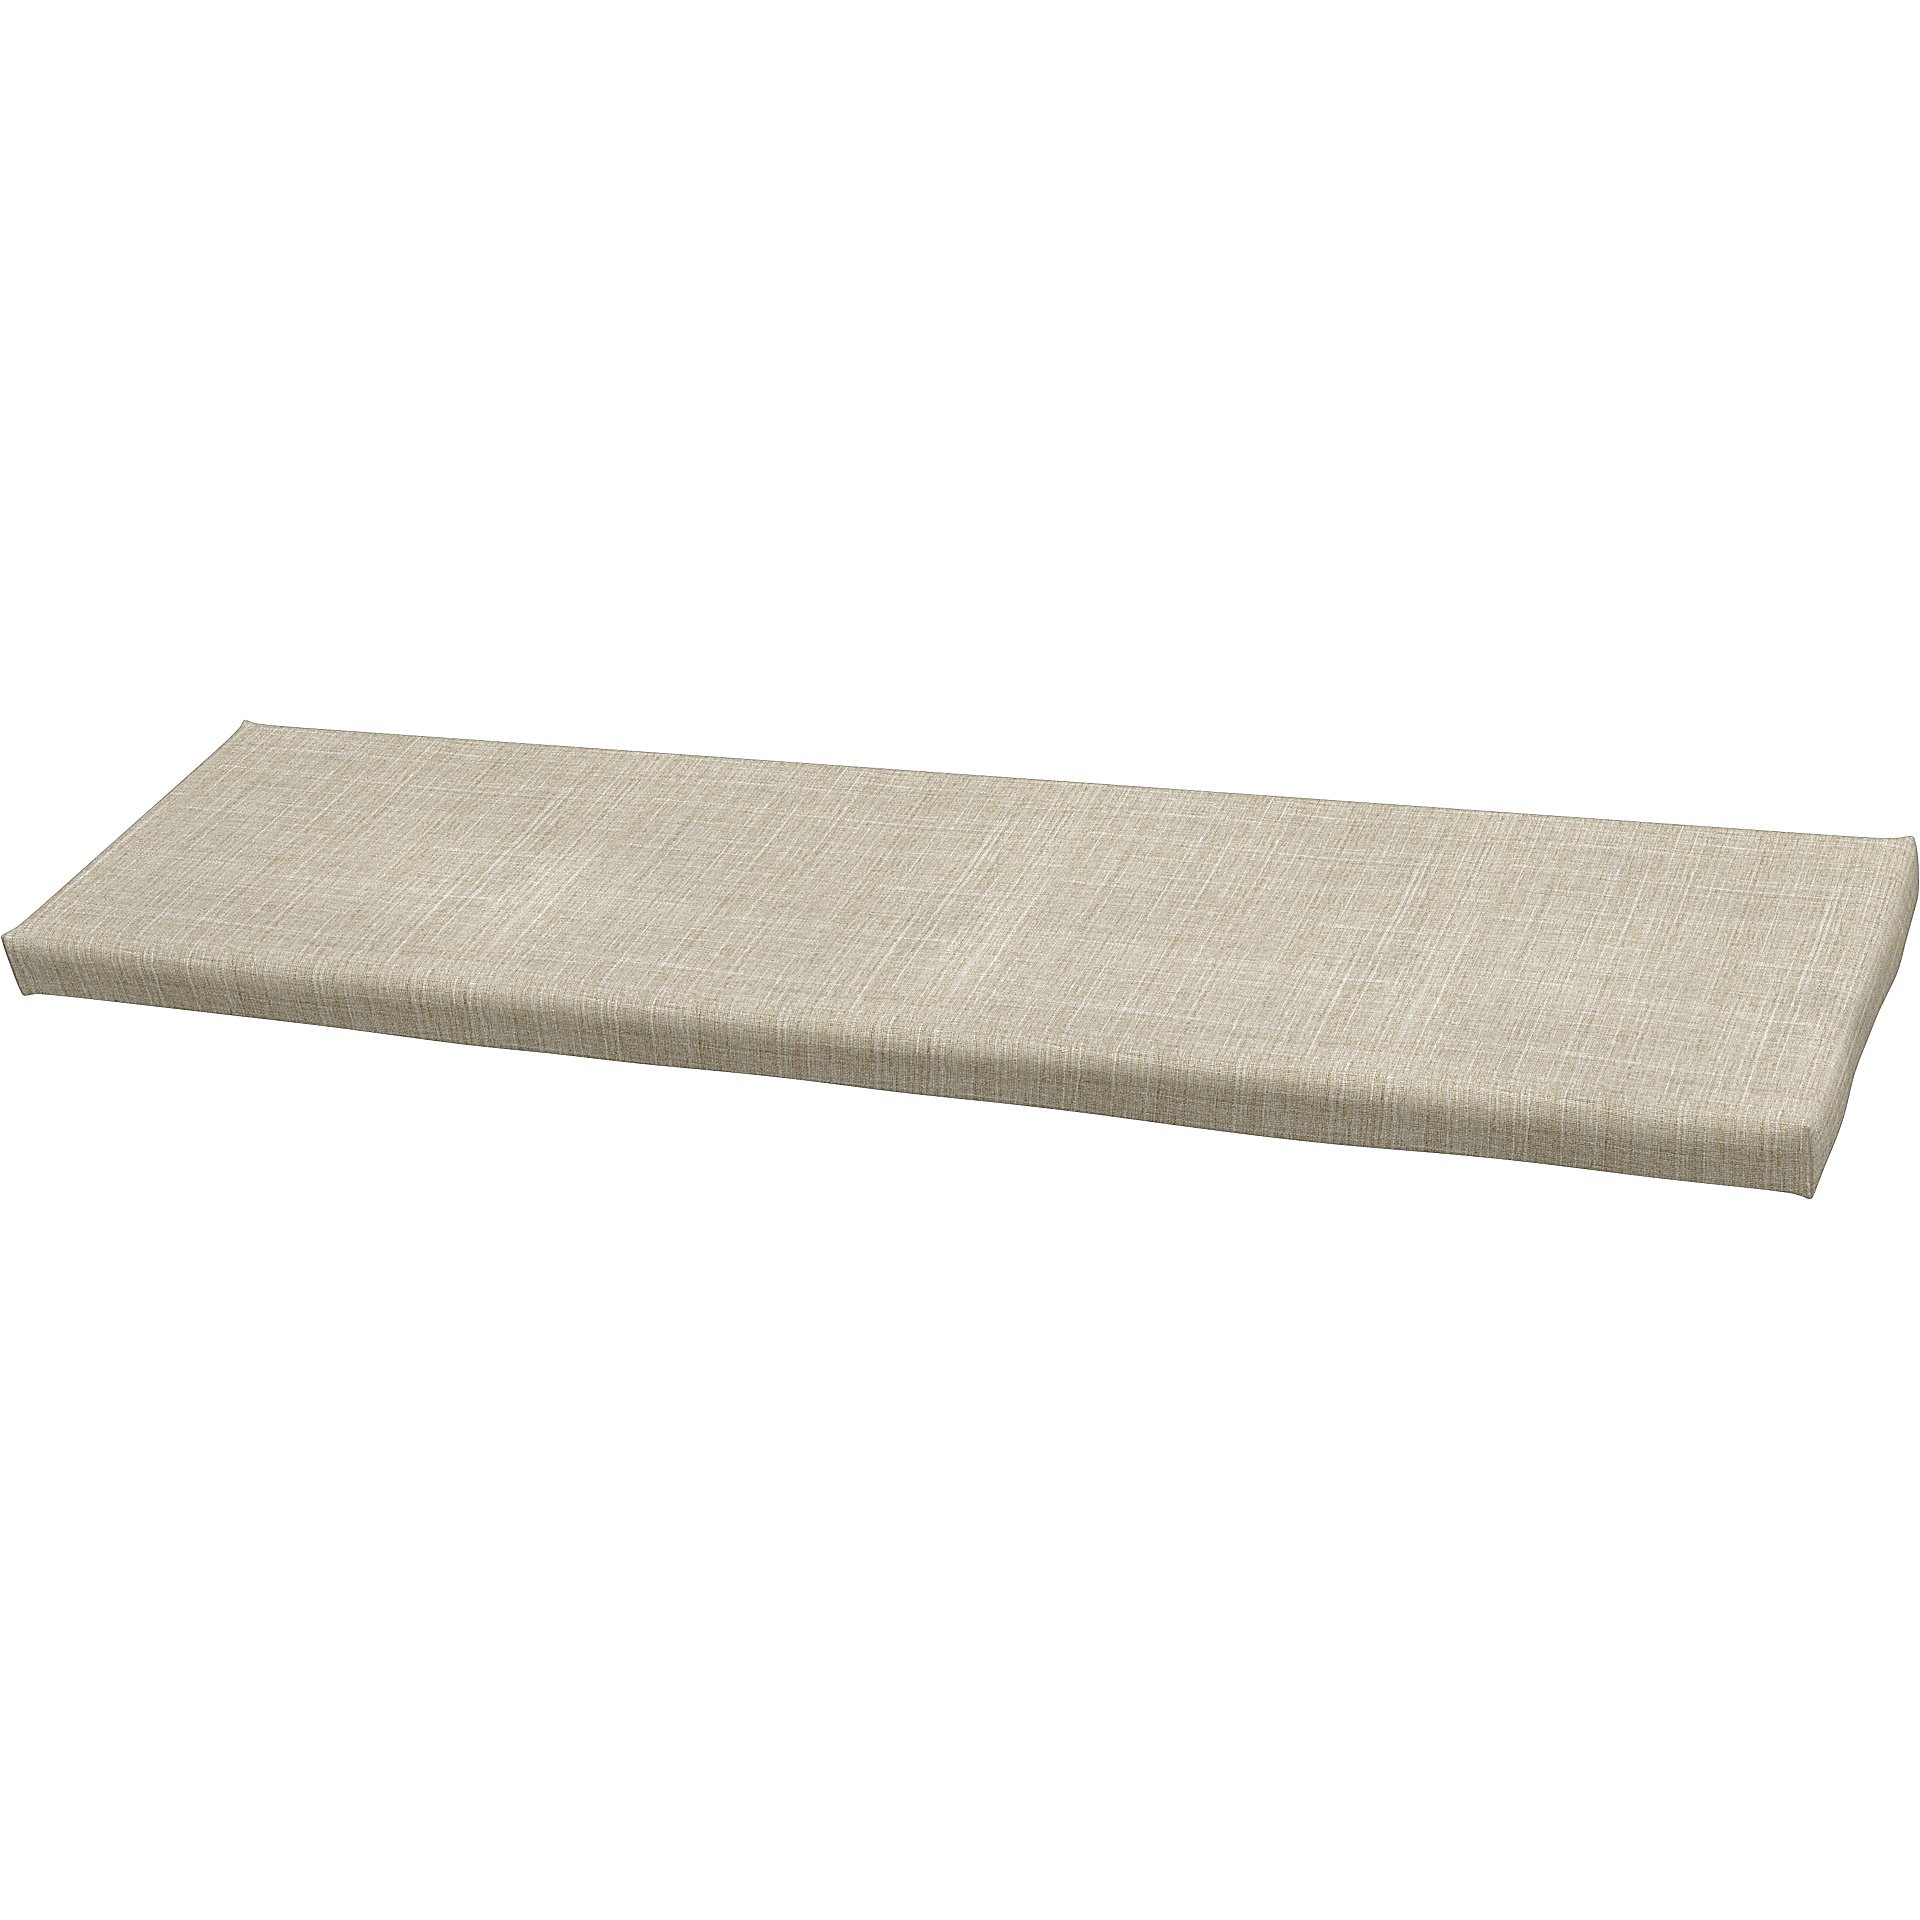 IKEA - Universal bench cushion cover 120x35x3,5 cm, Sand Beige, Boucle & Texture - Bemz